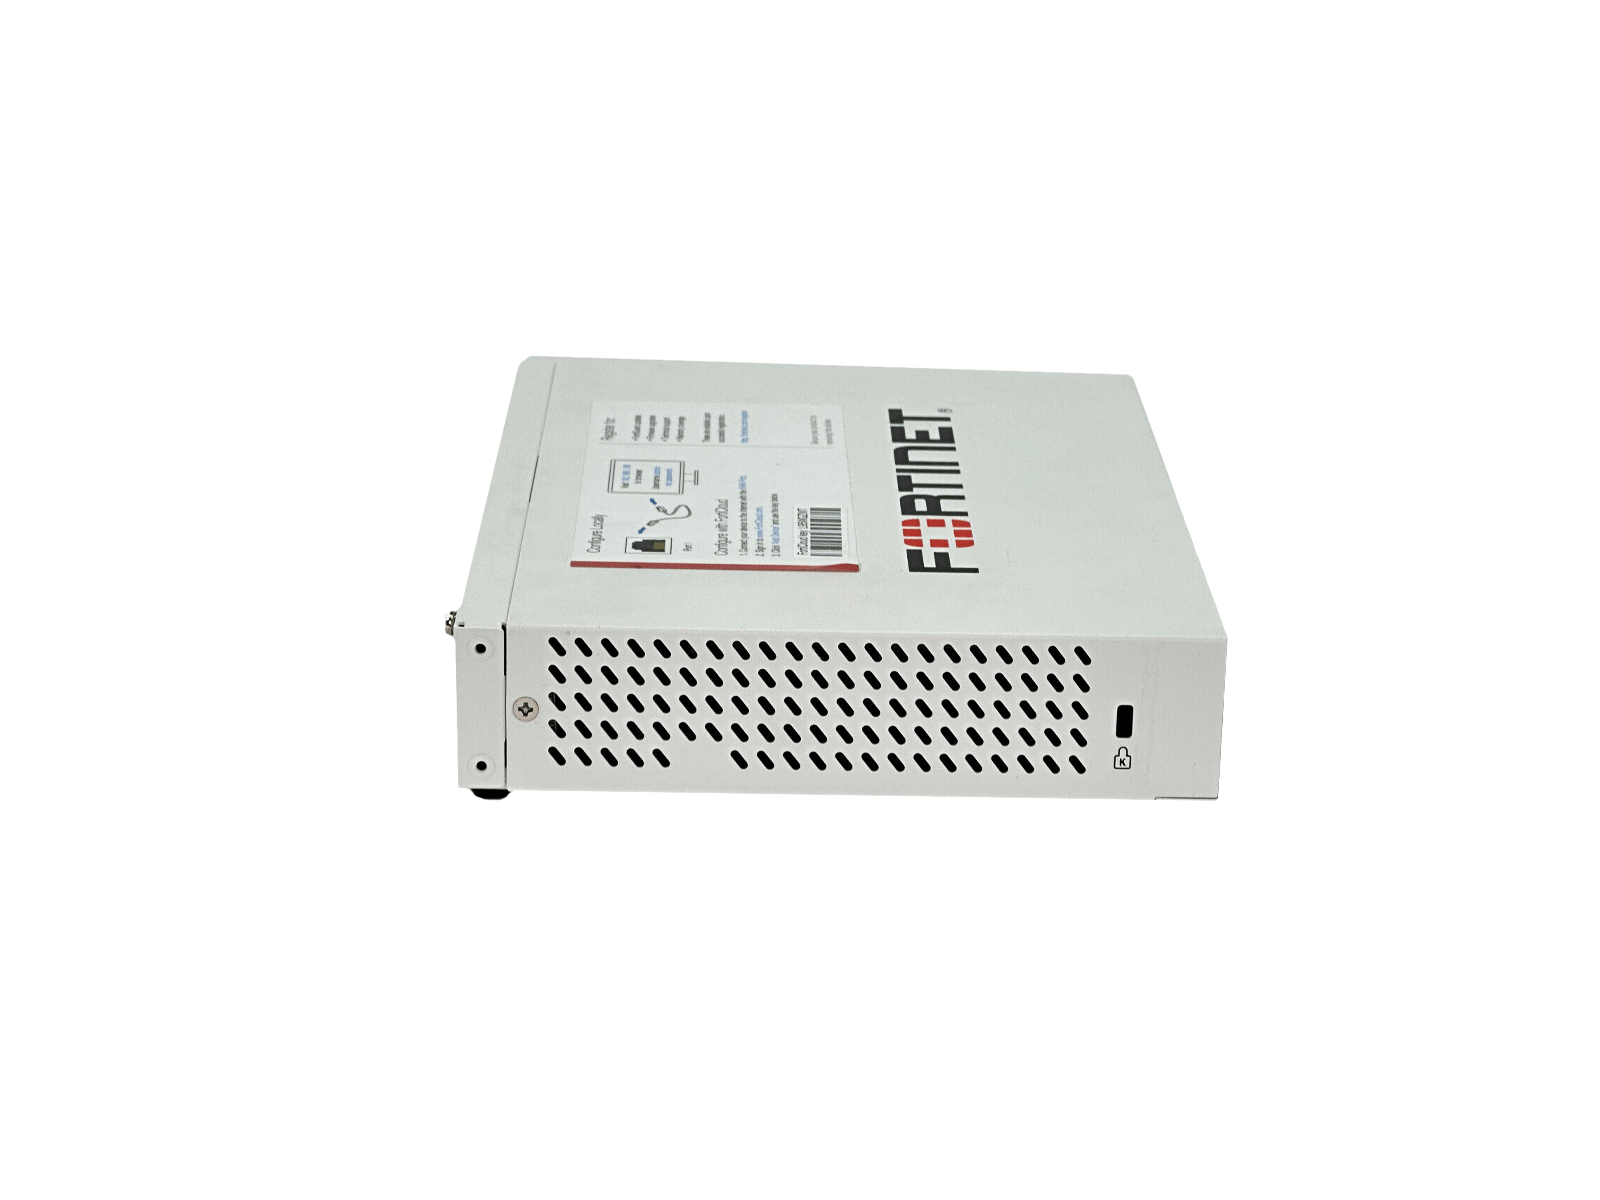 Fortinet FortiGate P18816-01-03 60E Next Generation Security Firewall 10x GE RJ45 WAN DMZ IPS.